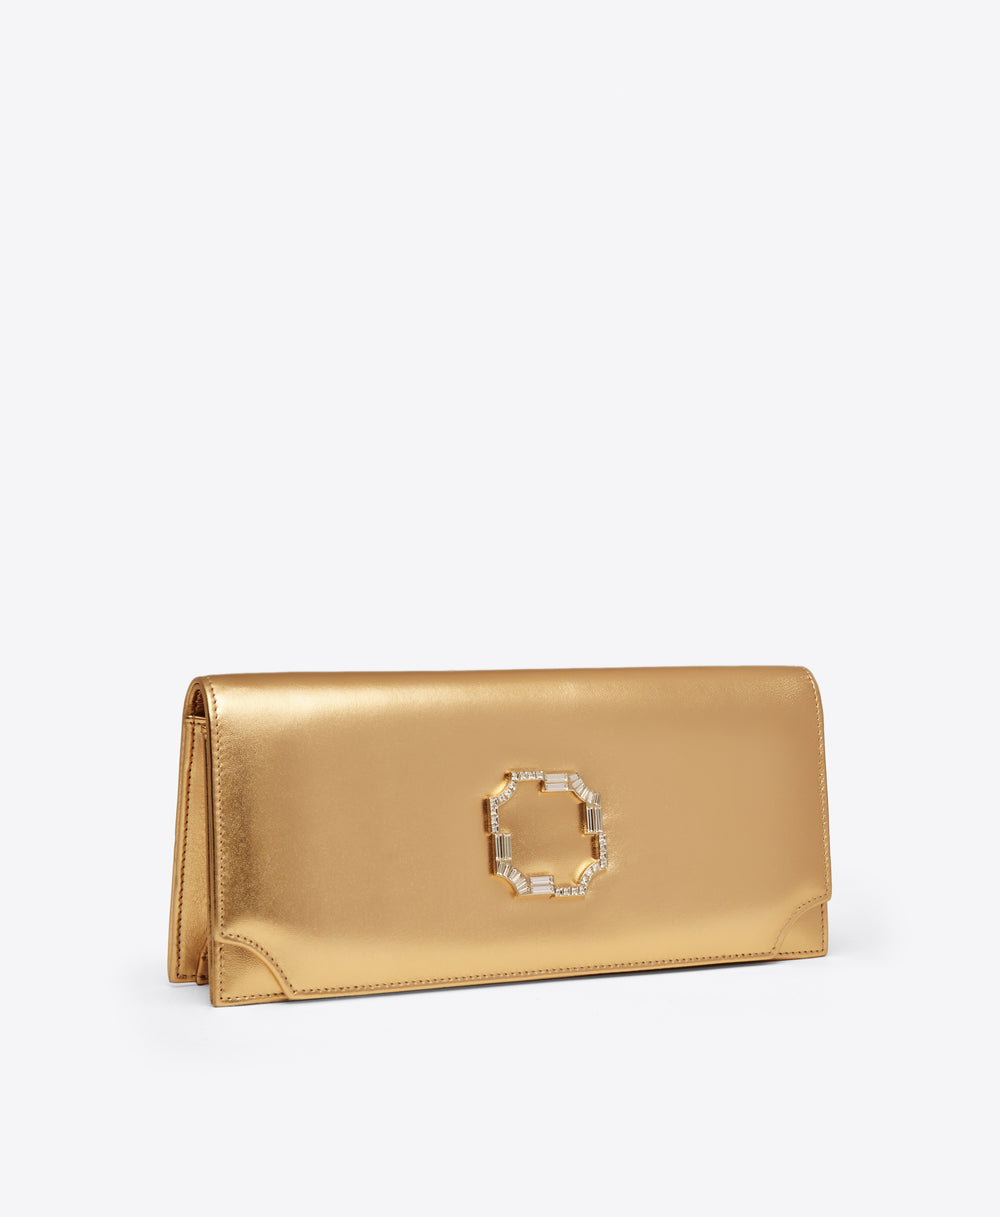 Vivien Gold Metallic Leather Clutch Bag Malone Souliers